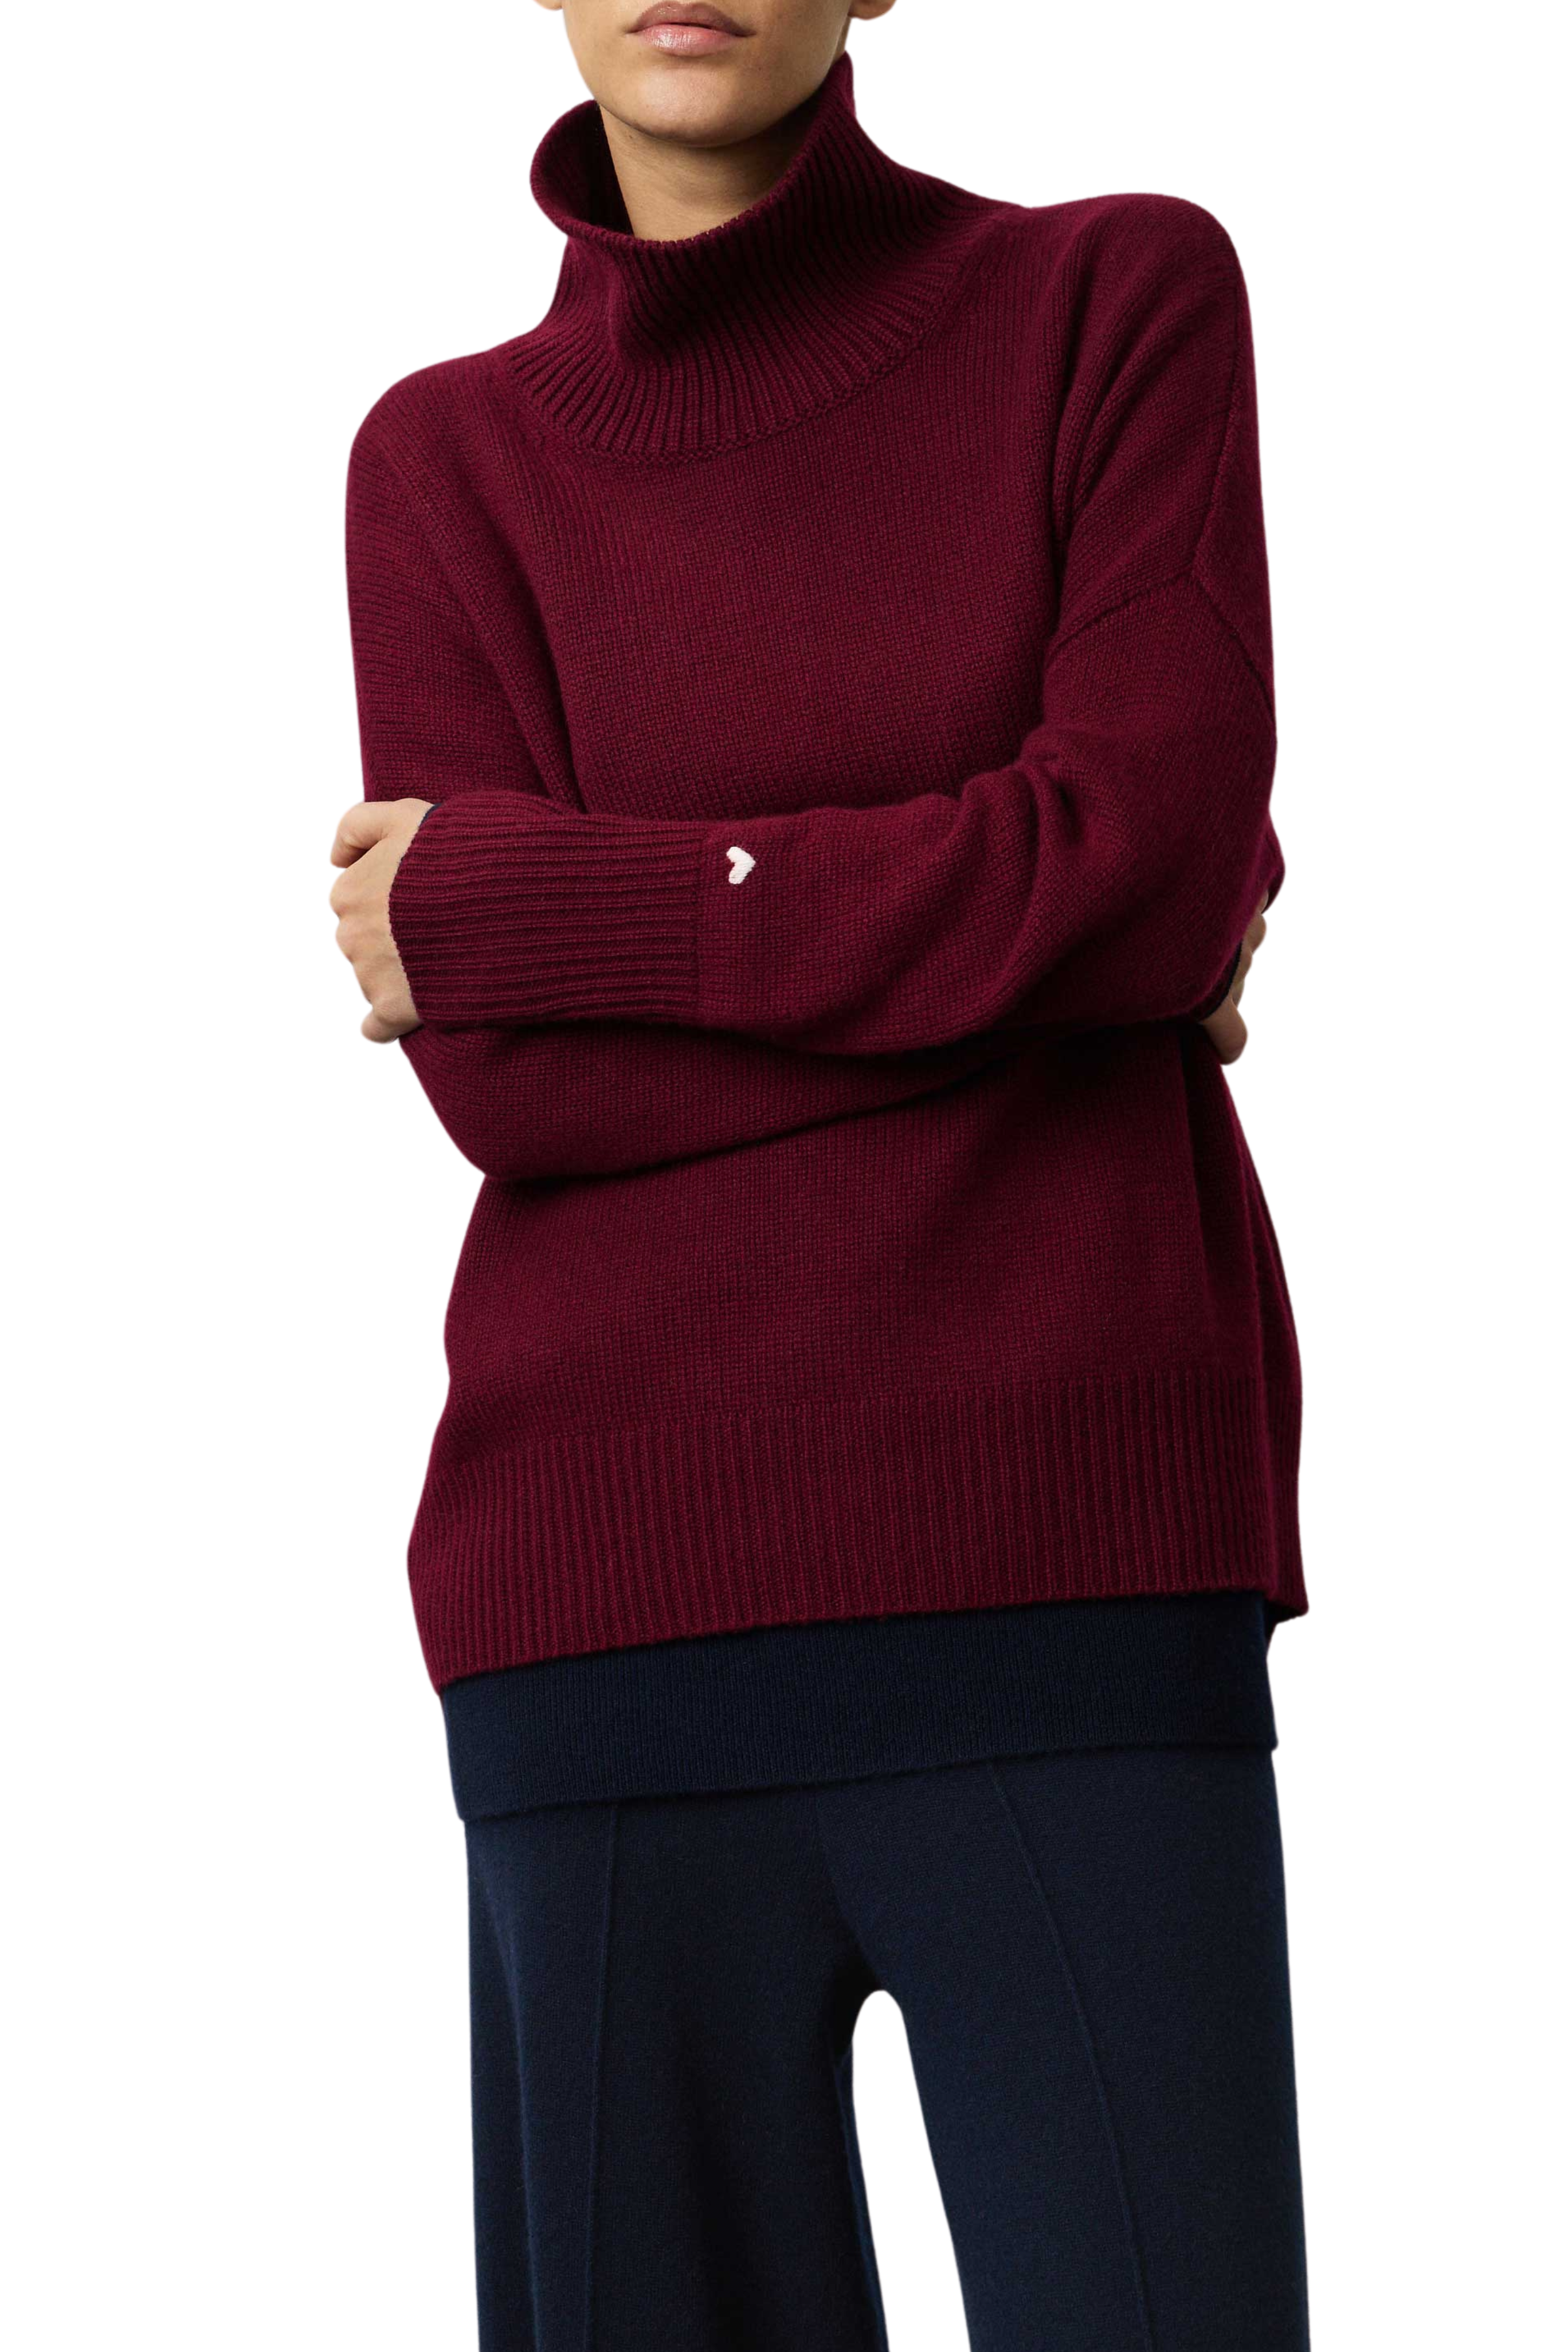 LISA YANG The Heidi Cashmere Sweater